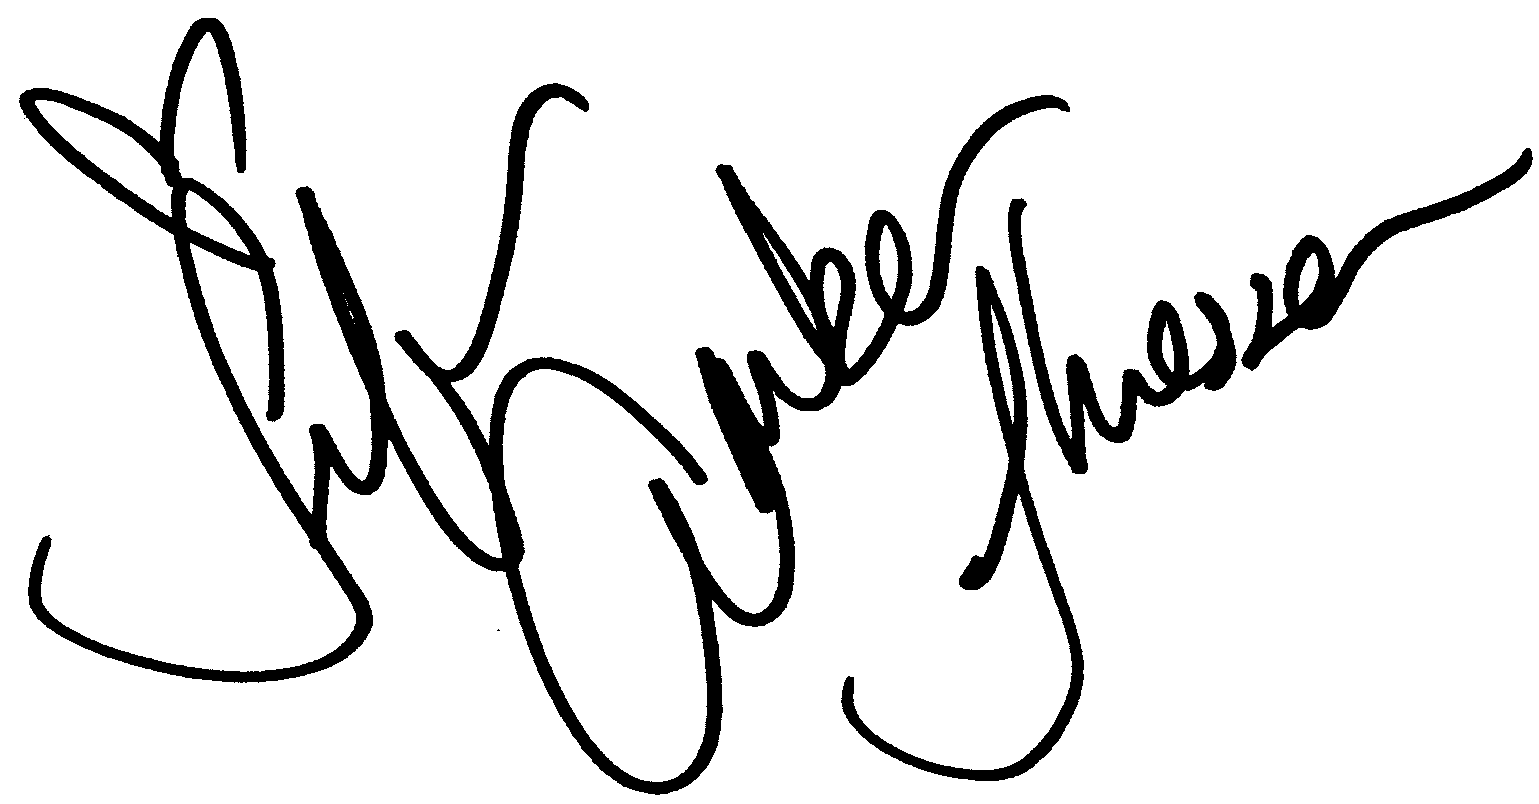 Tifani Amber Thiessen autograph facsimile